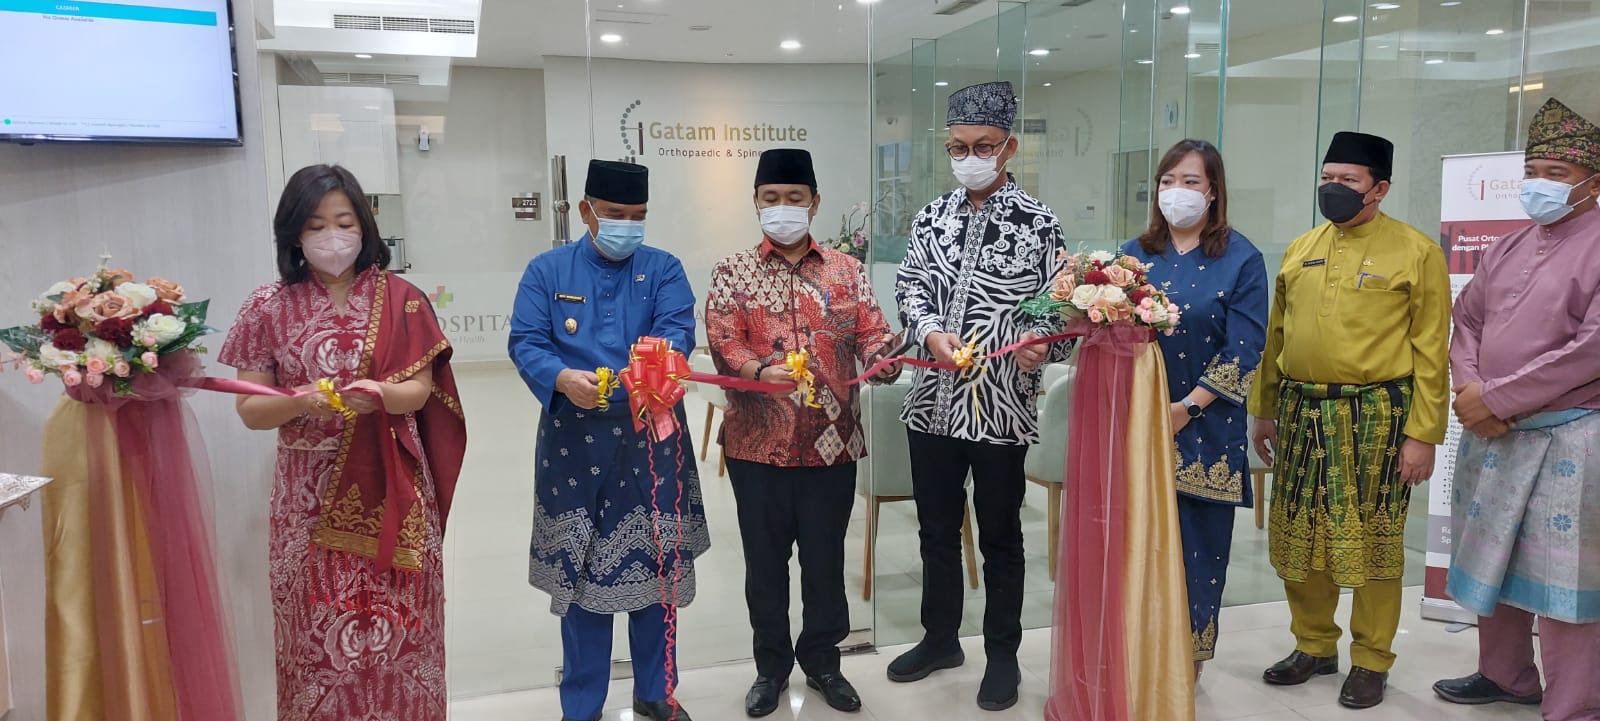  Eka Hospital Pekanbaru Hadirkan Gatam Institute, Pusat Ortopedi Berteknologi Tinggi se-Asteng